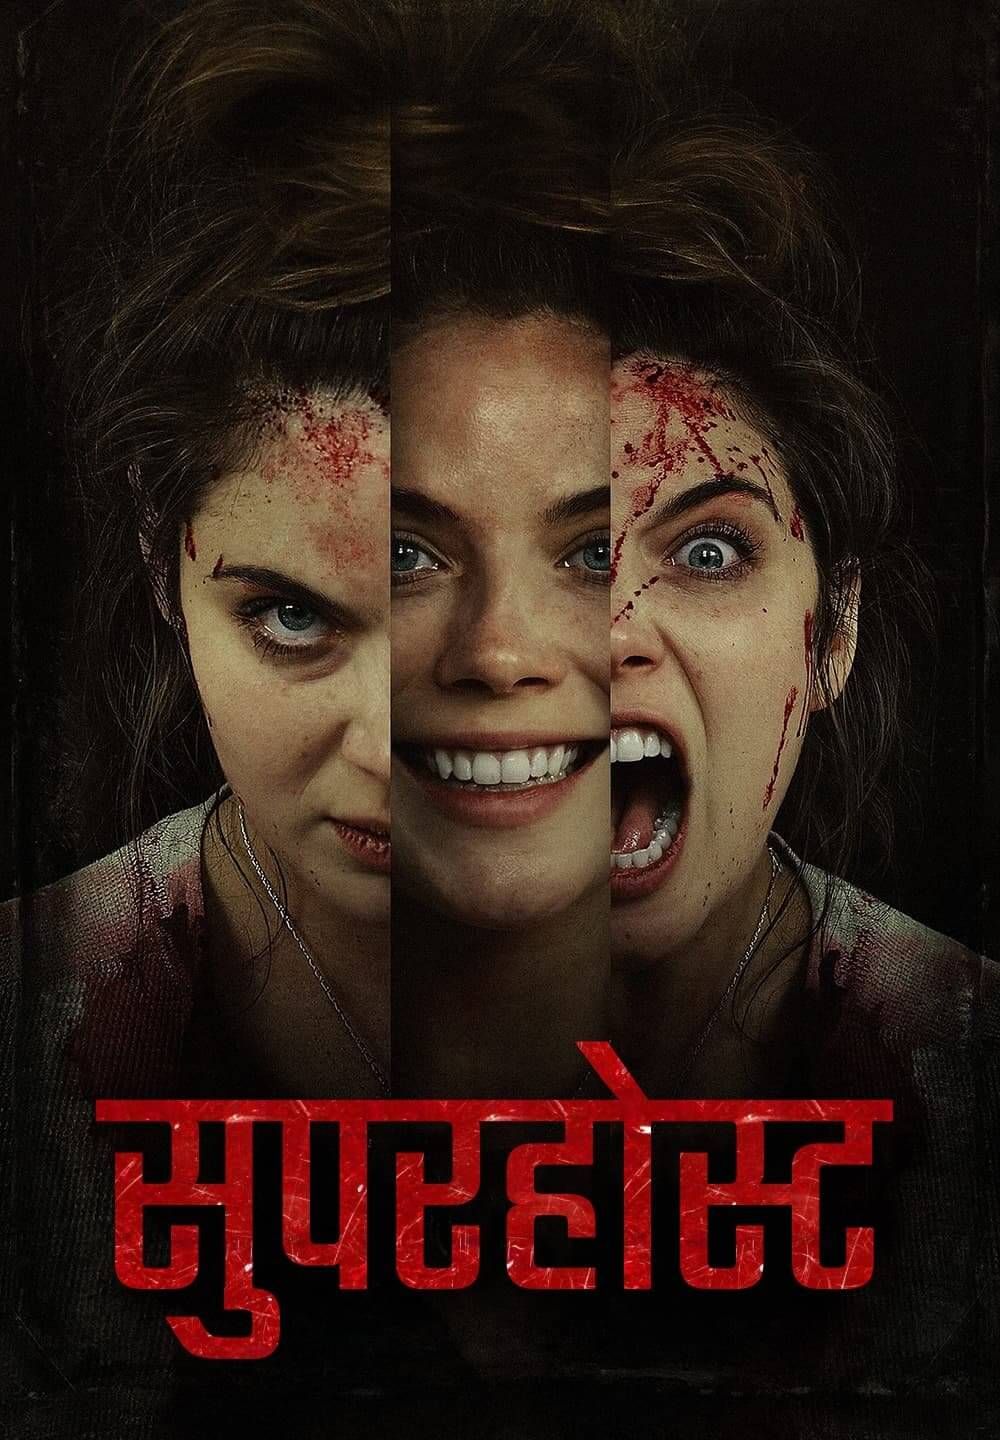 Superhost (2021) Hindi HQ Dubbed HDRip download full movie